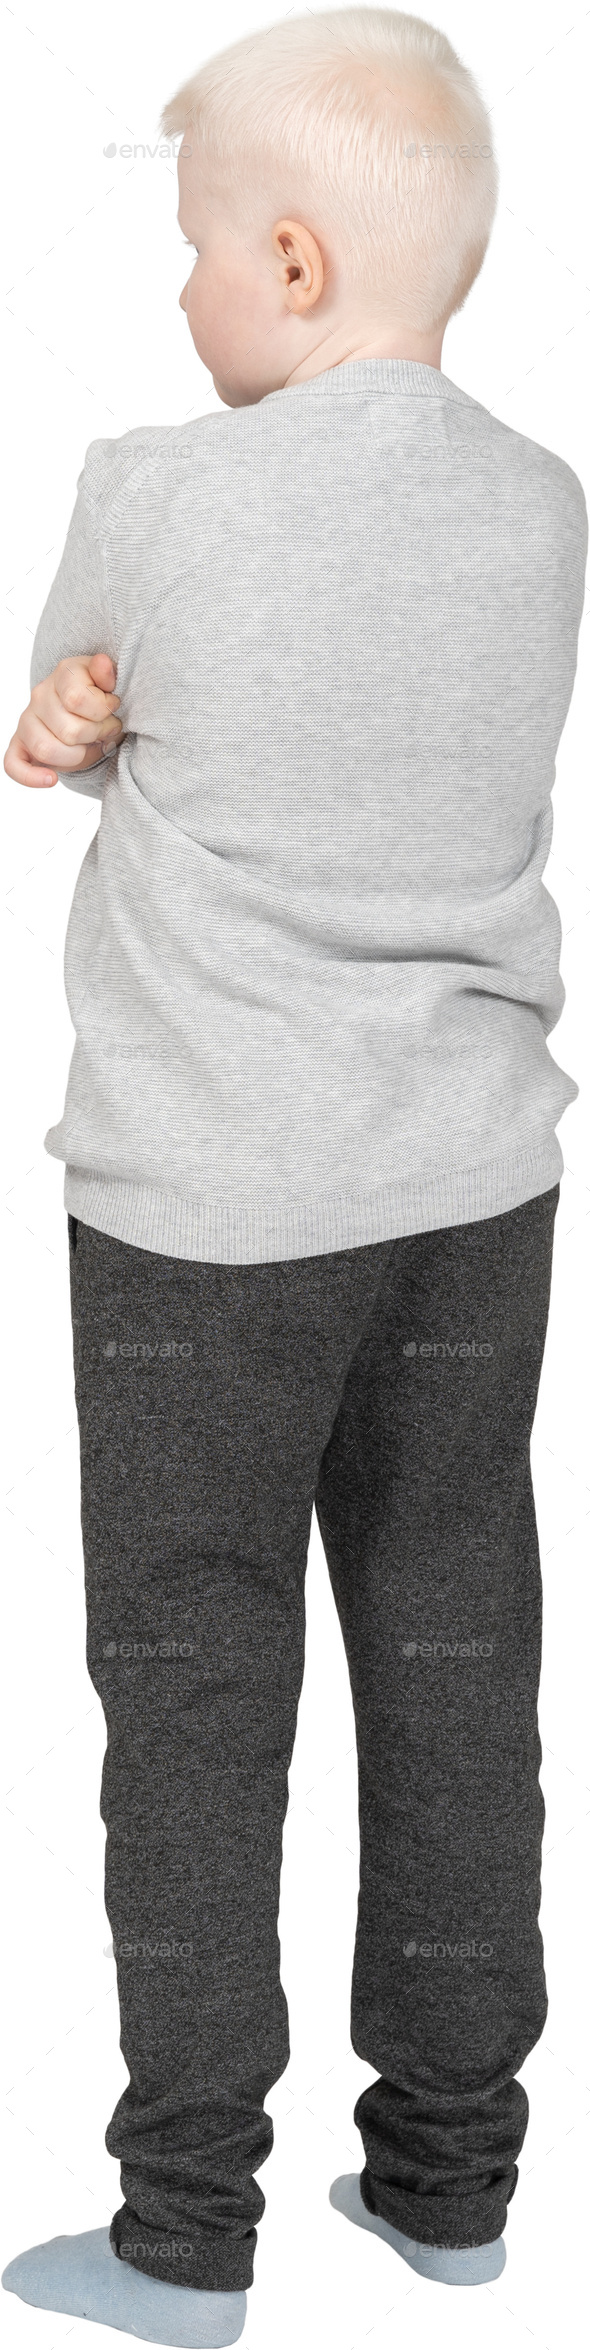 a baby wearing a gray sweatshirt and black pants